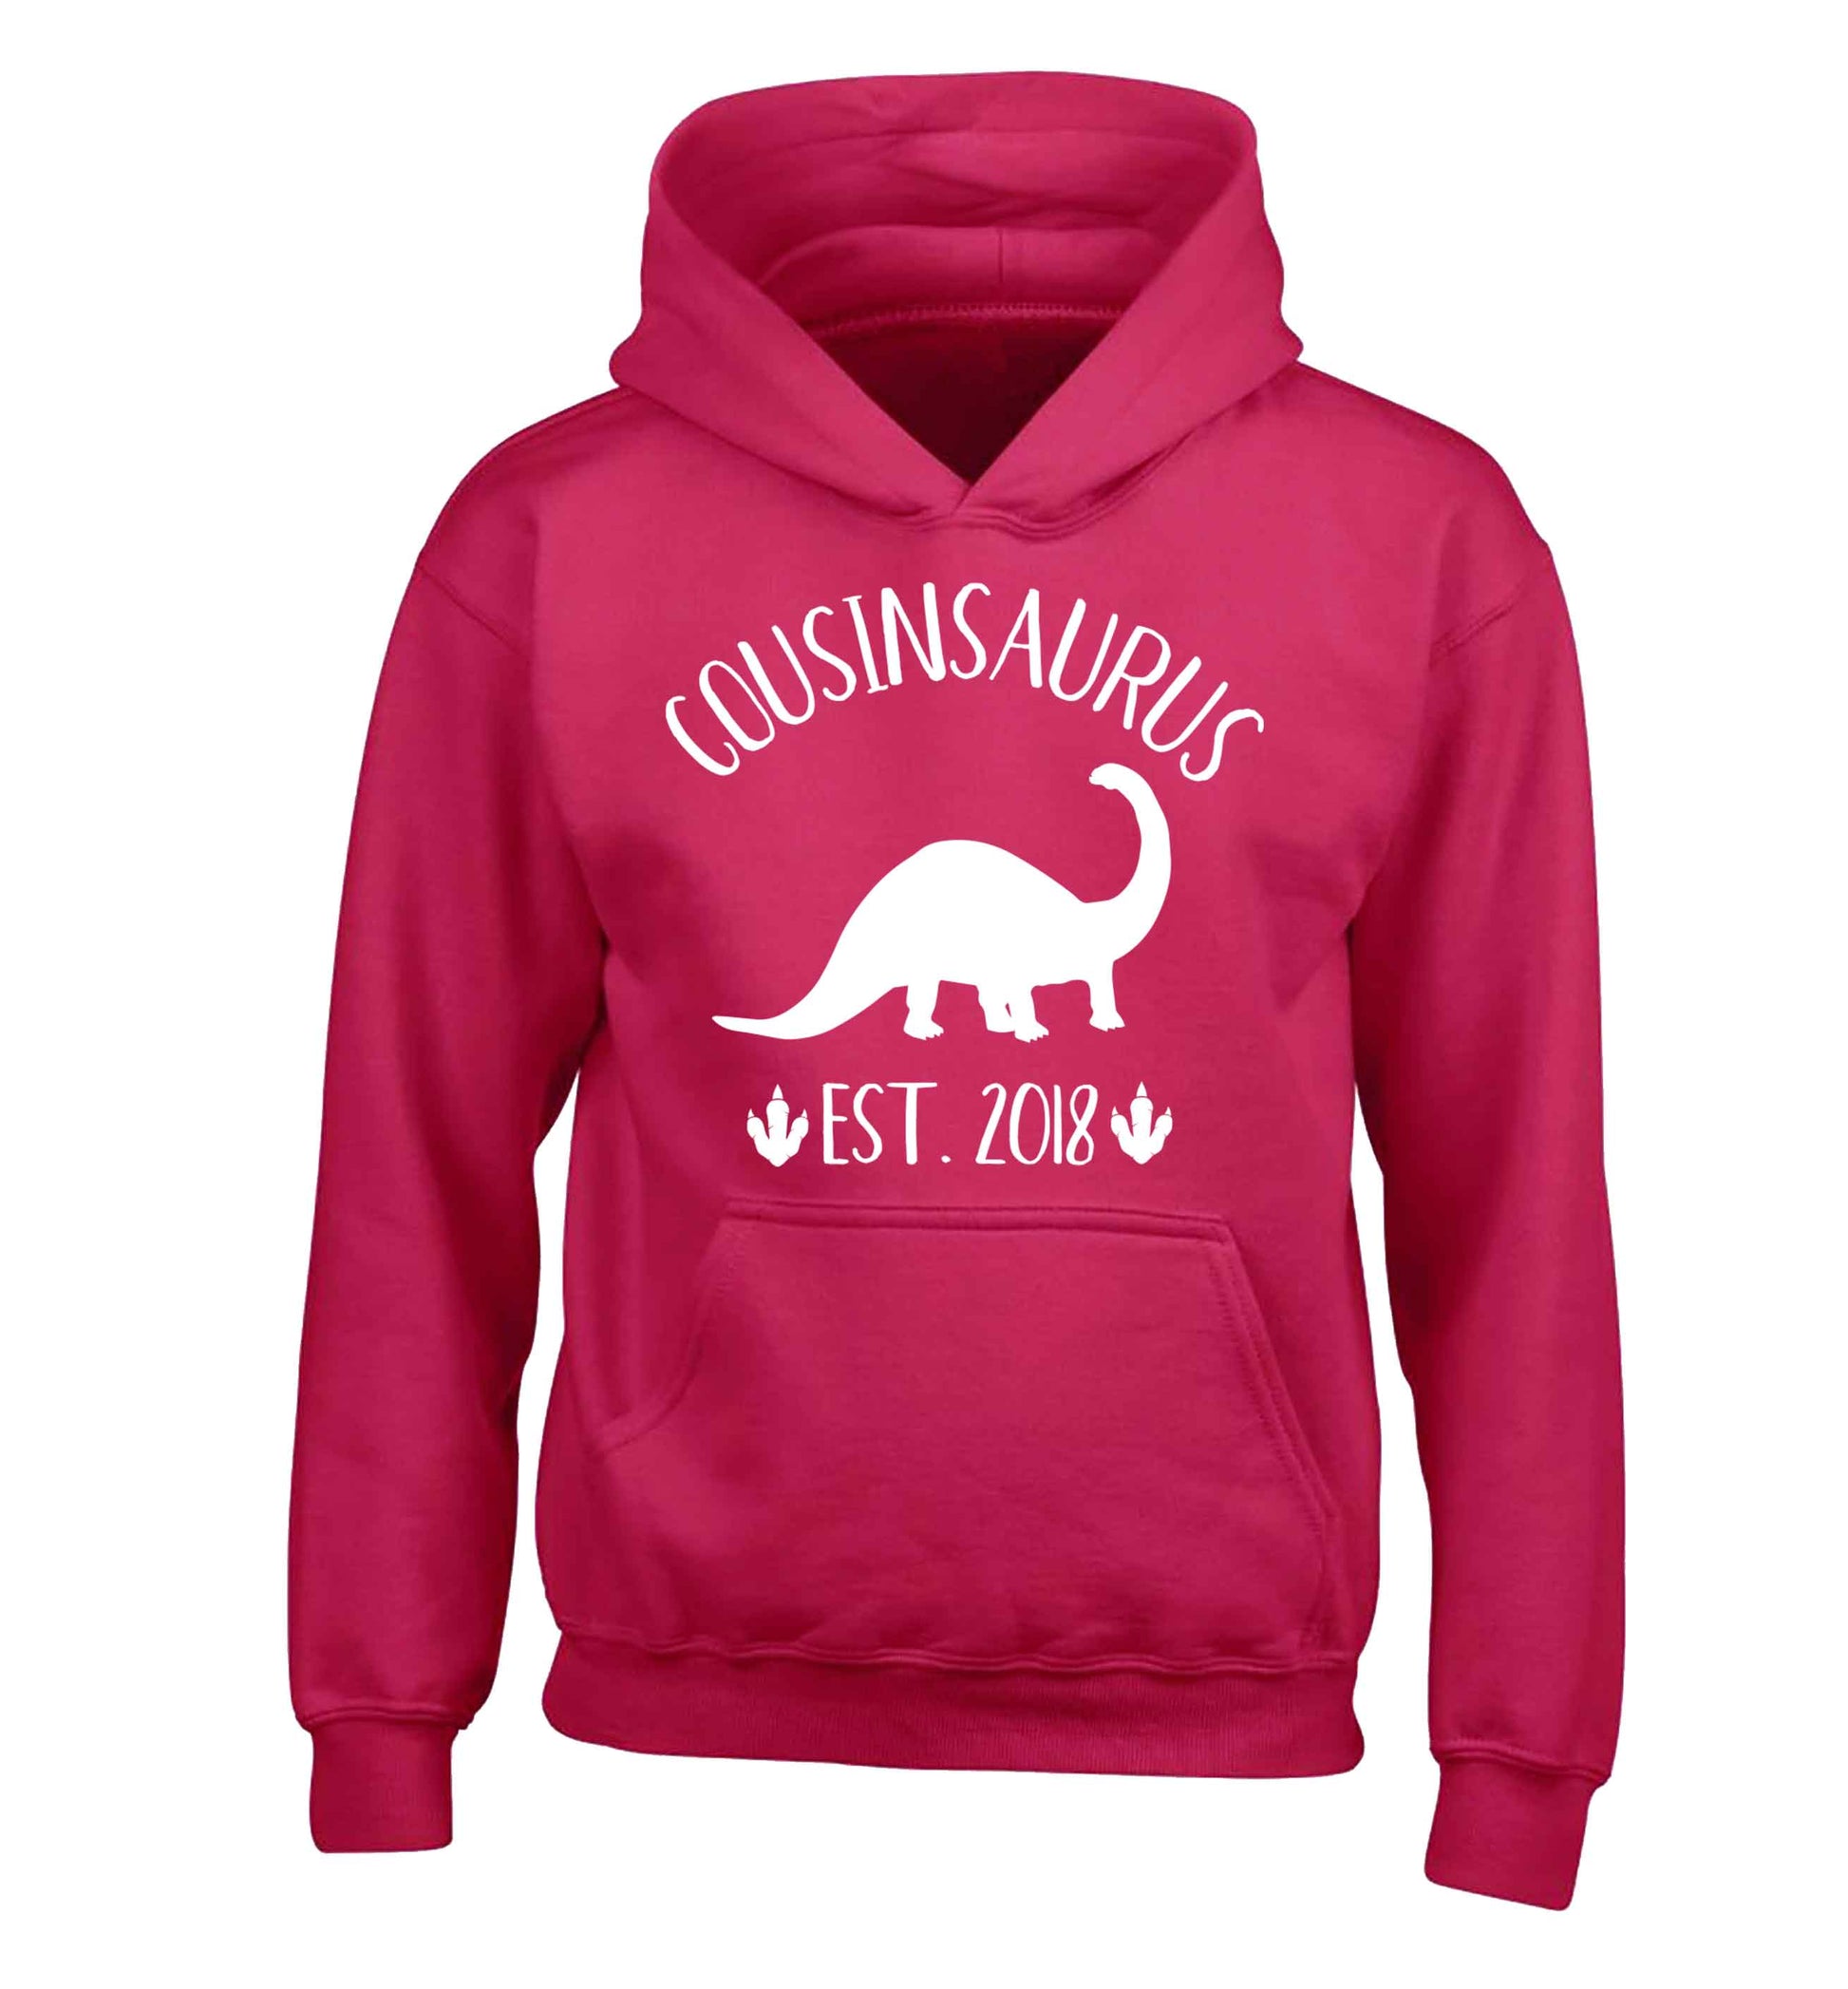 Personalised cousinsaurus since (custom date) children's pink hoodie 12-13 Years